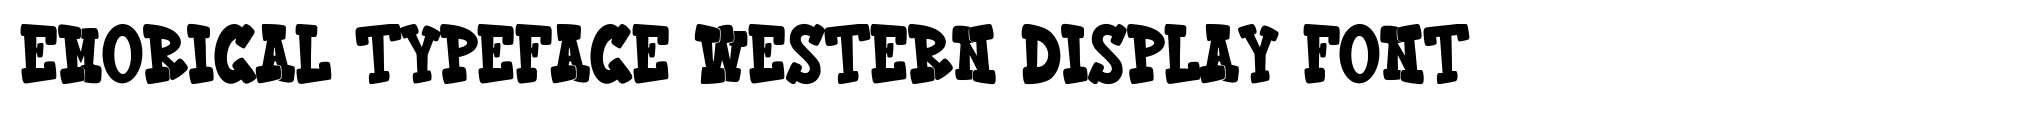 Emorical Typeface Western Display Font image